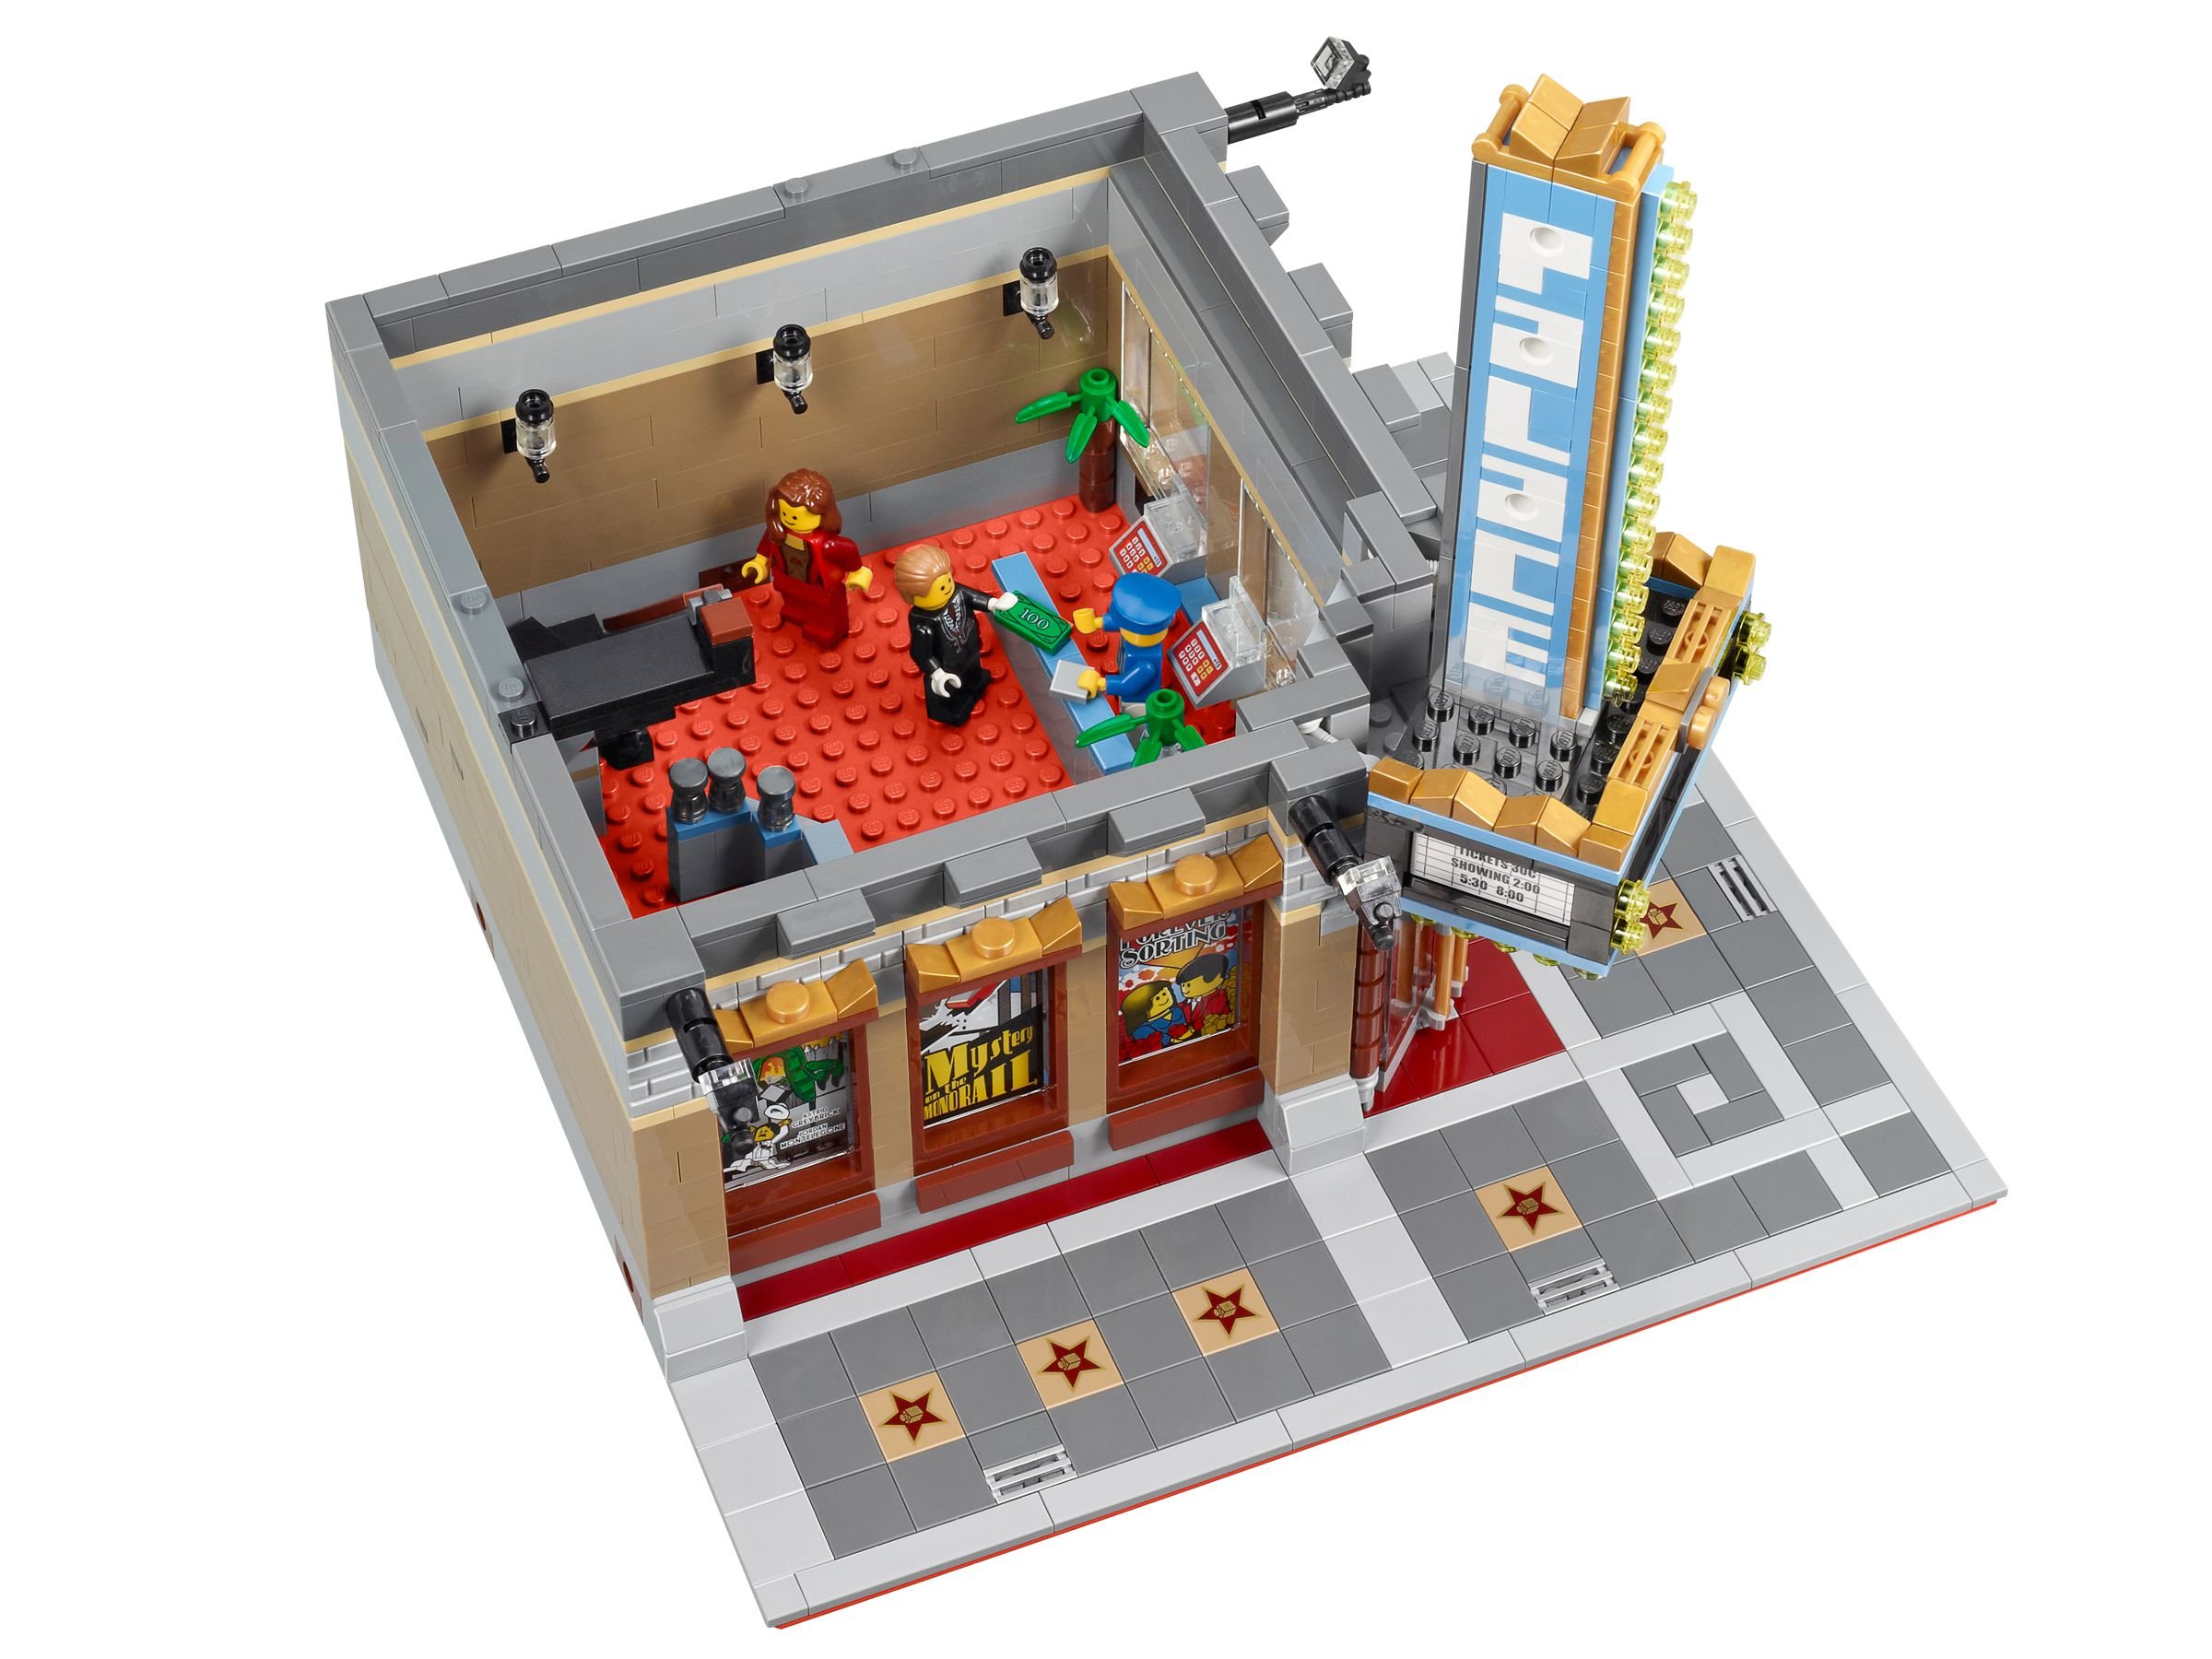 LEGO Advanced Models 10232 Palace Cinema LEGO_10232_alt2.jpg